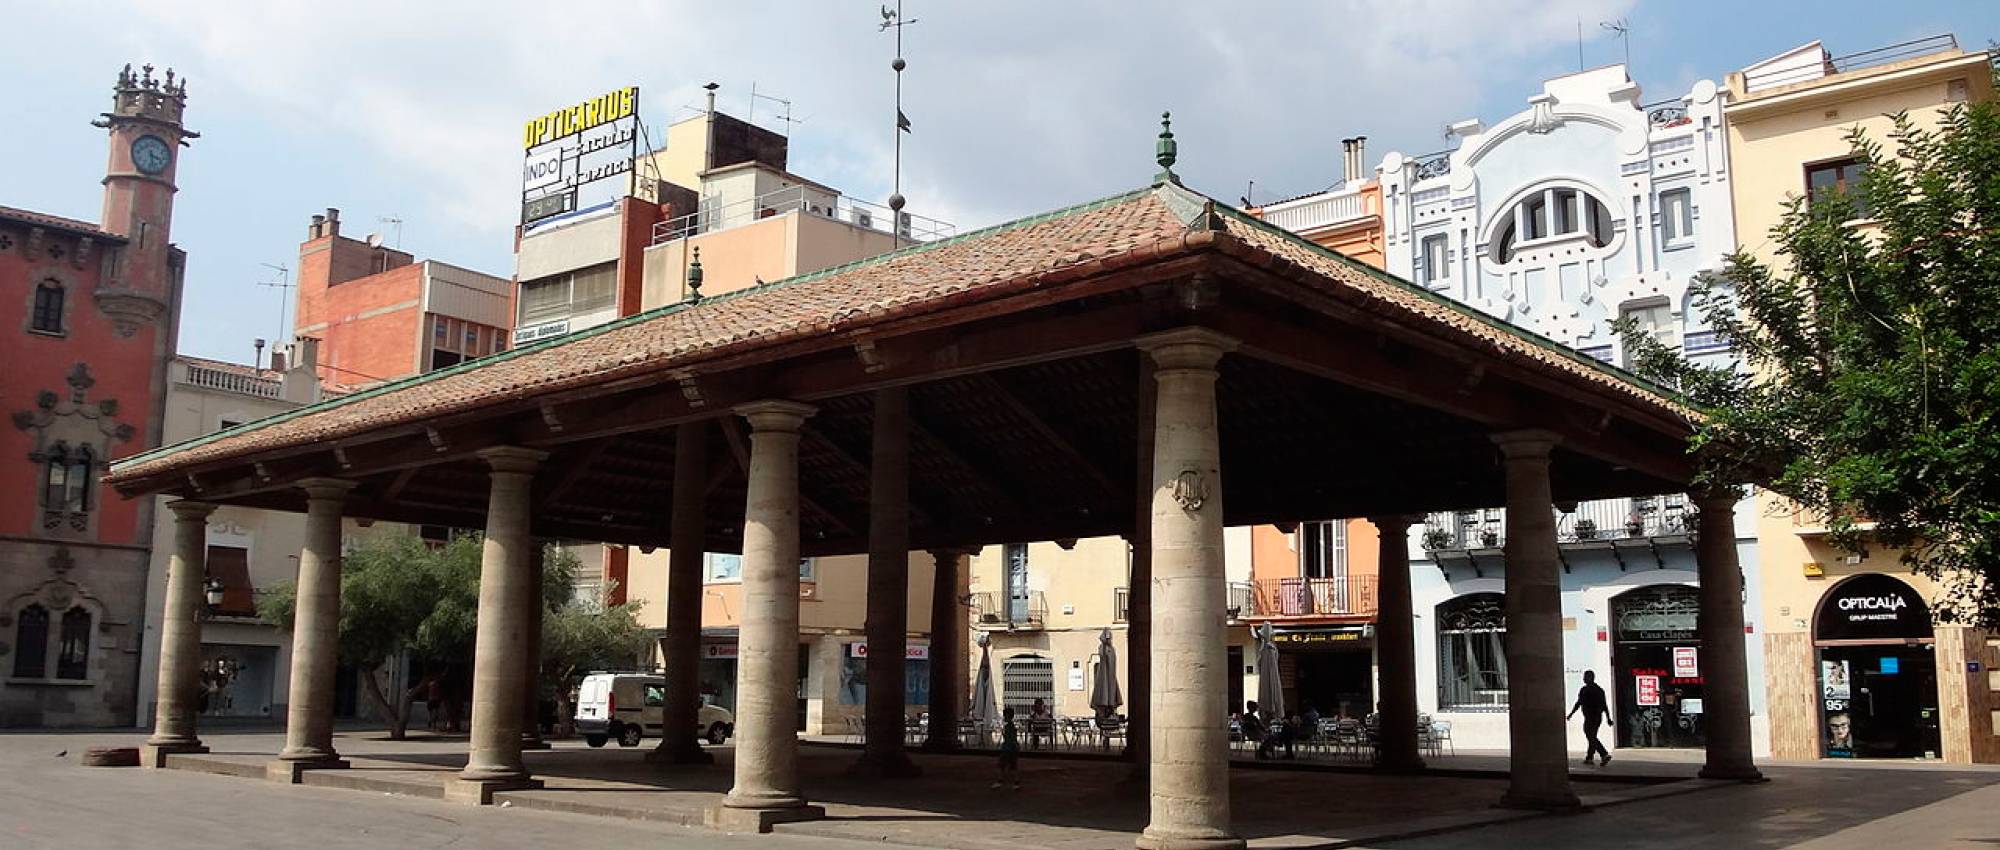 Cubierta del mercado de Granollers. CC BY-SA 3.0 - Mhocalc / Wikimedia Commons